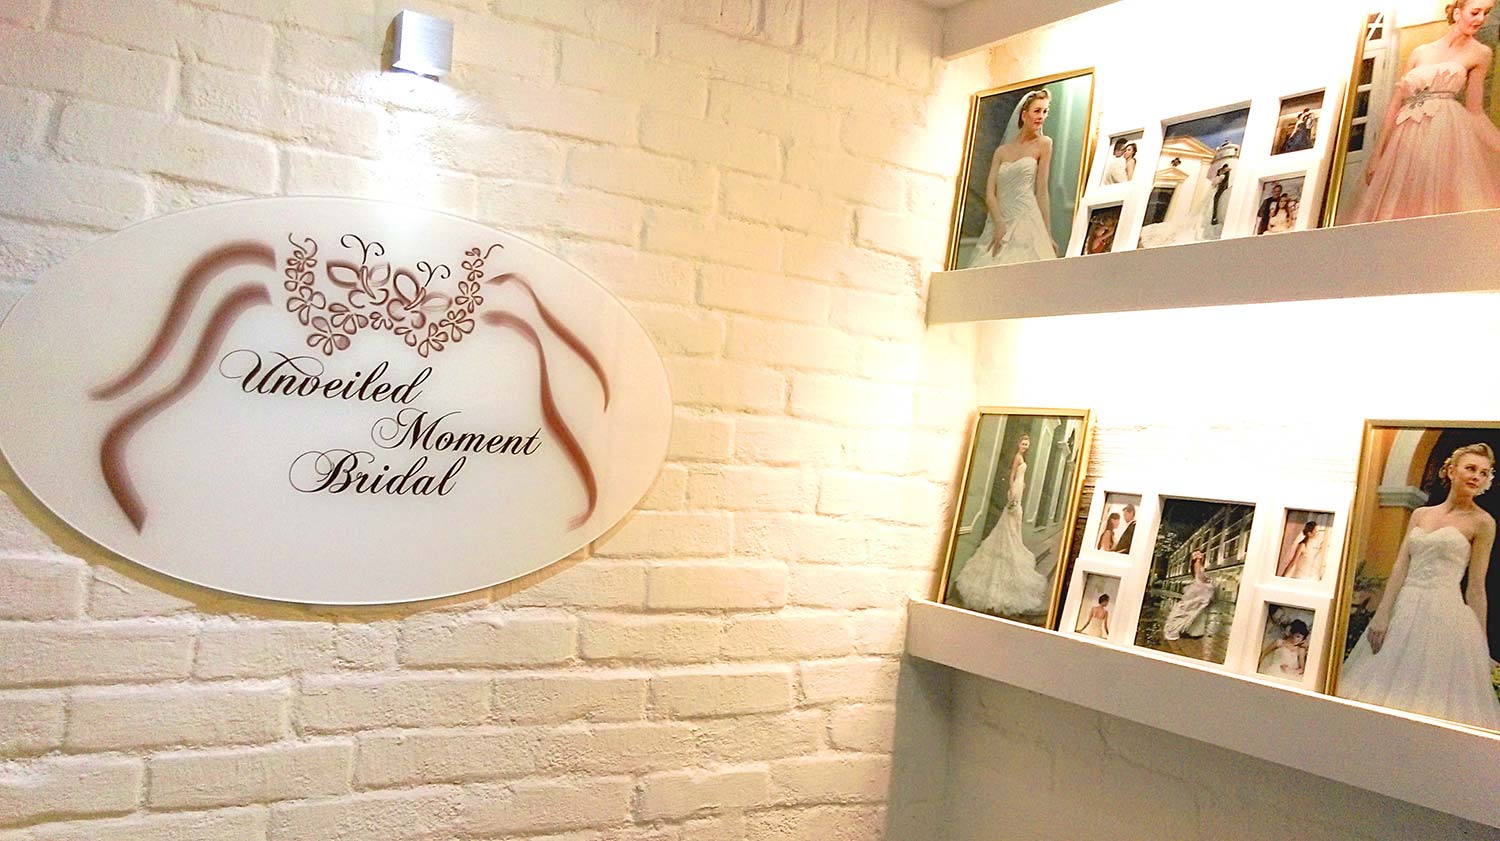 Unveiled Moment Bridal showroom entrance with shop logo 
準新娘可以在最舒適的環境下揀選最合襯的婚紗